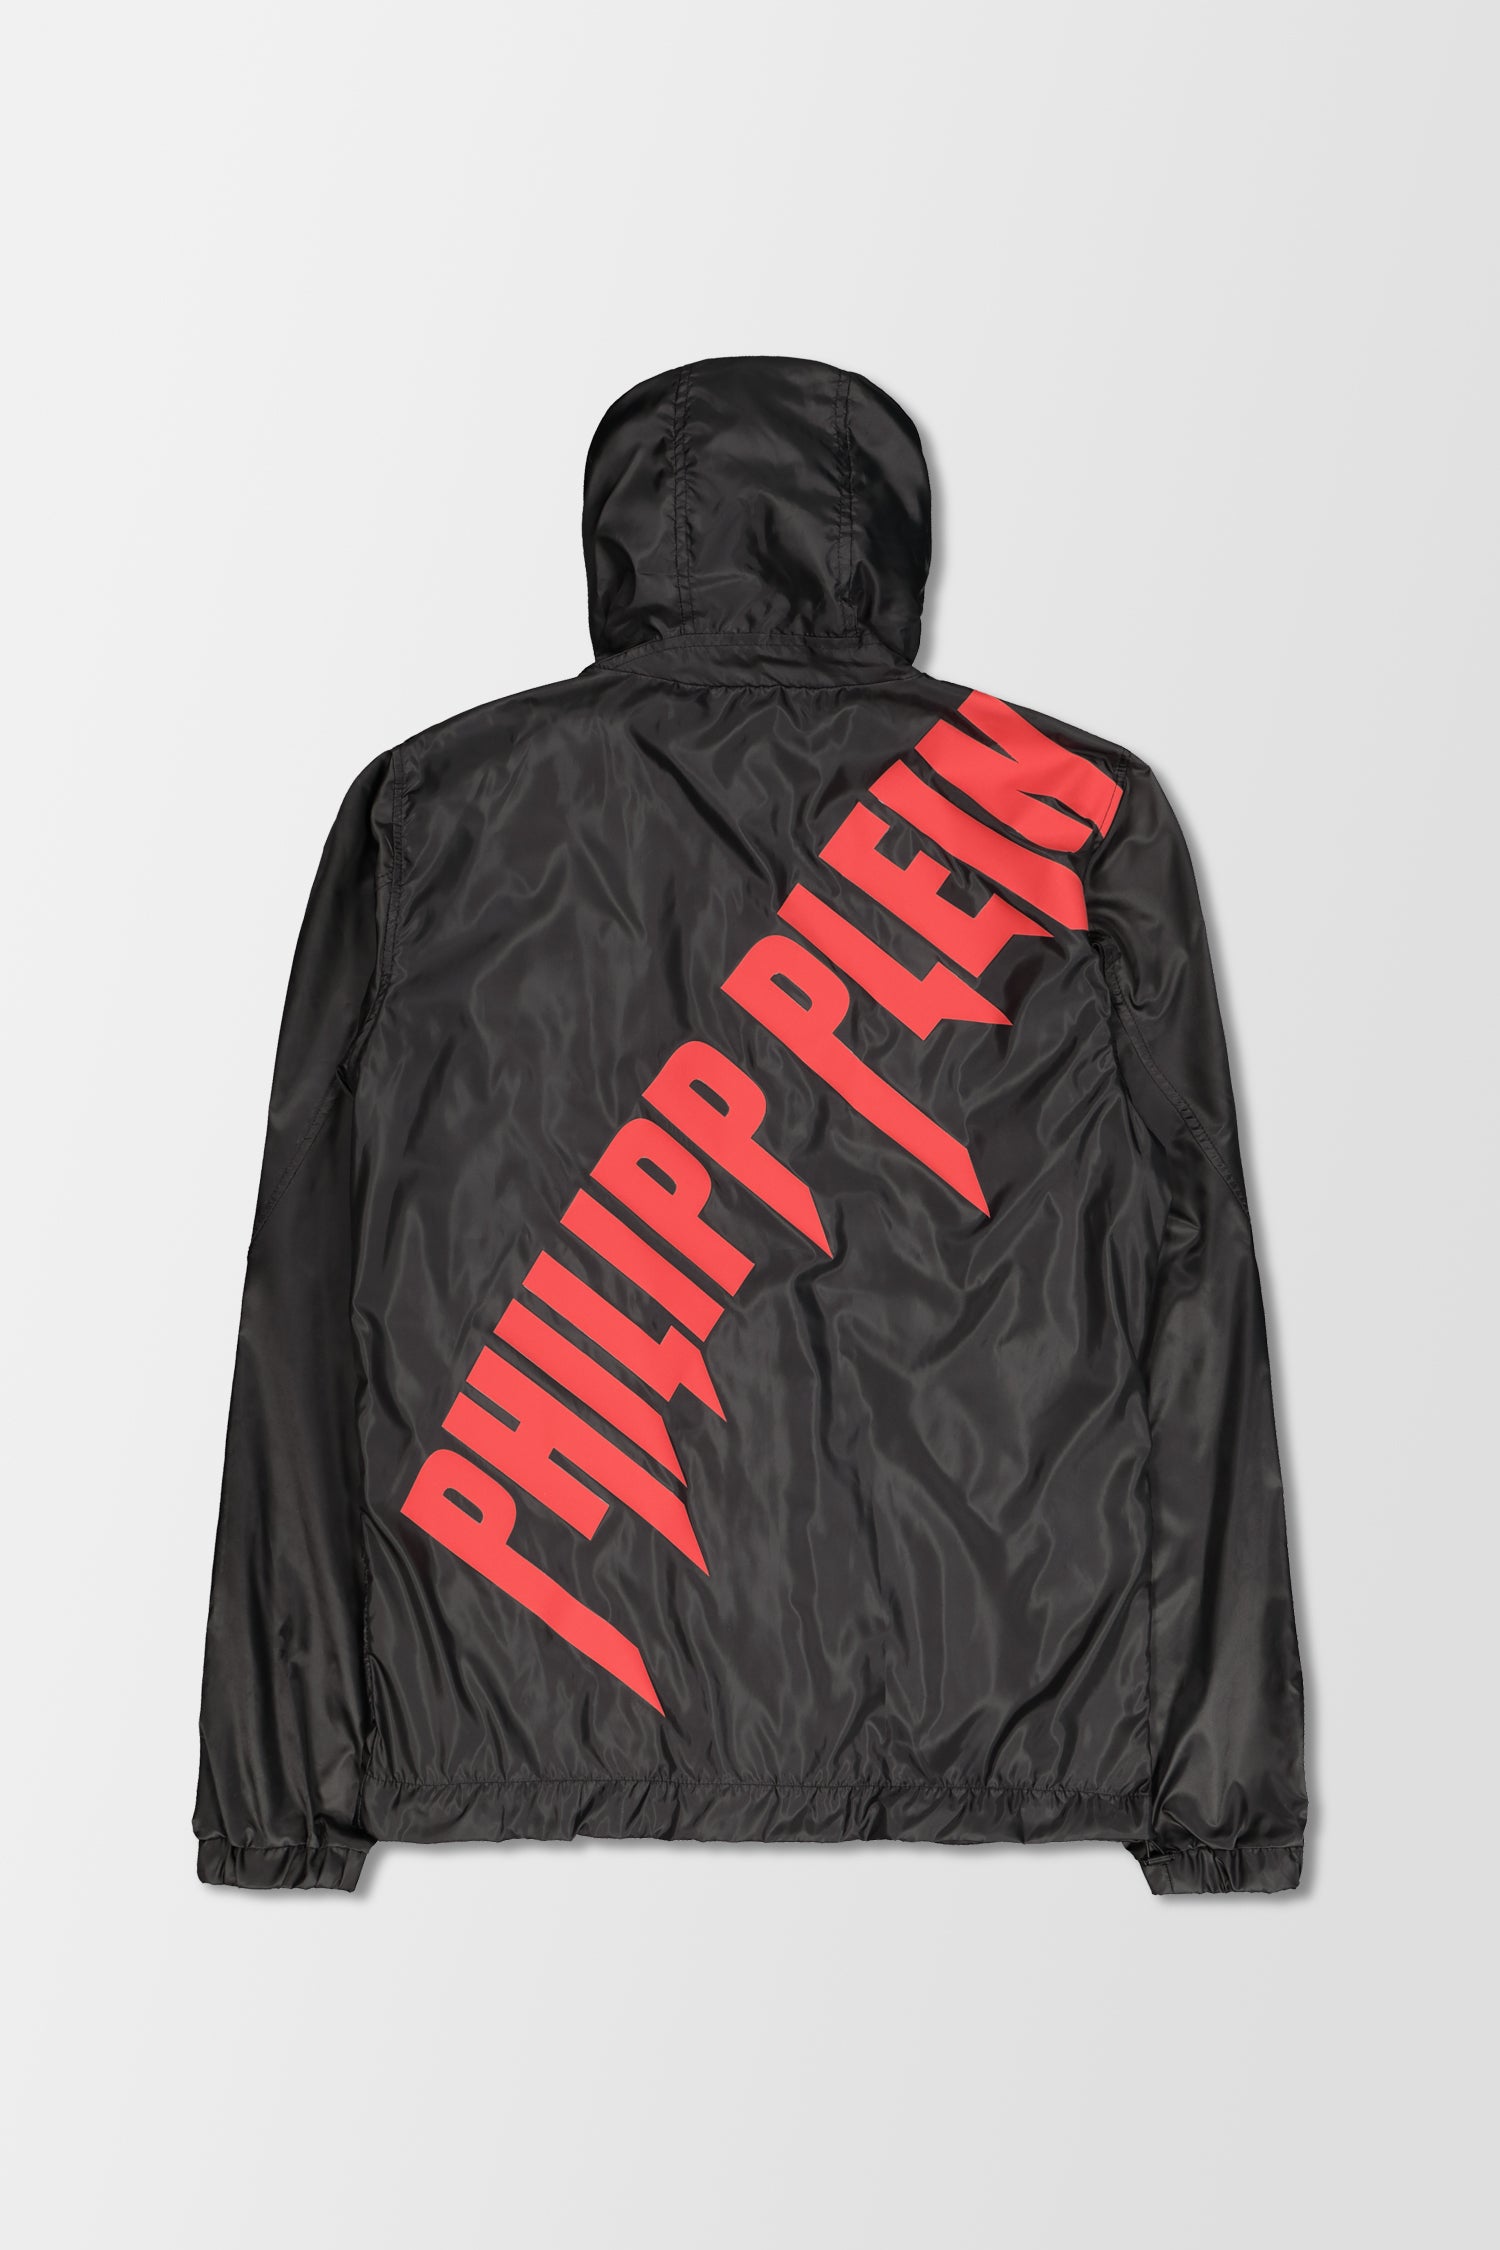 Philipp Plein Red Logo Back Print Nylon Jacket